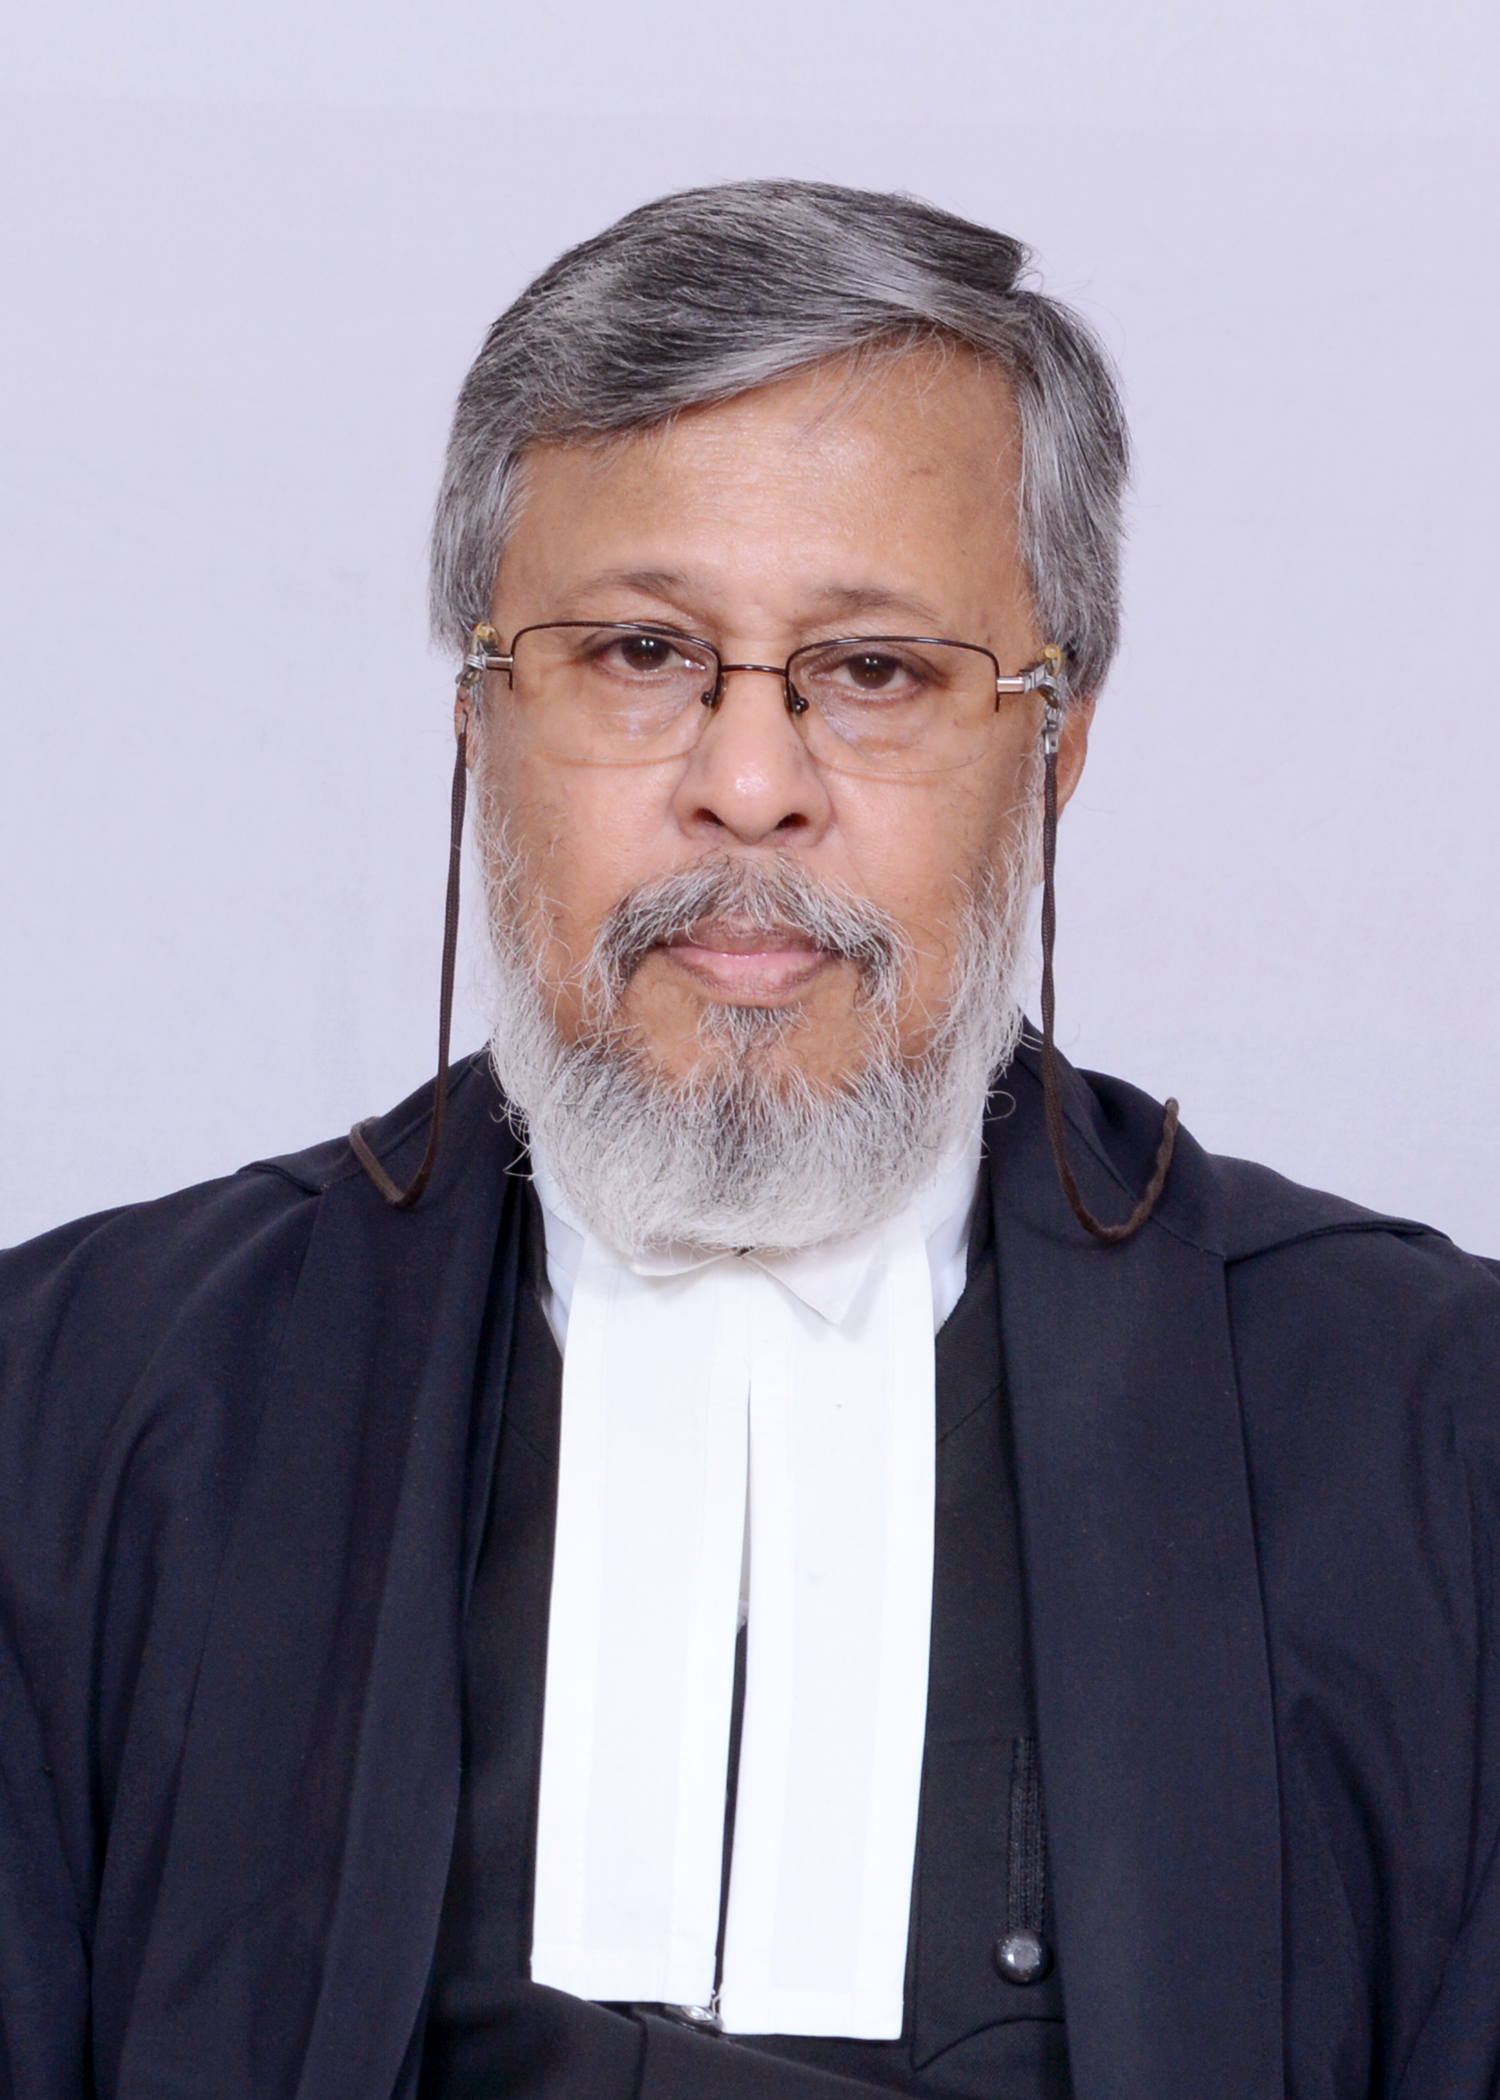 Hon’ble Mr. Justice Tarun Agarwala (Sr. Judge, Alld.)